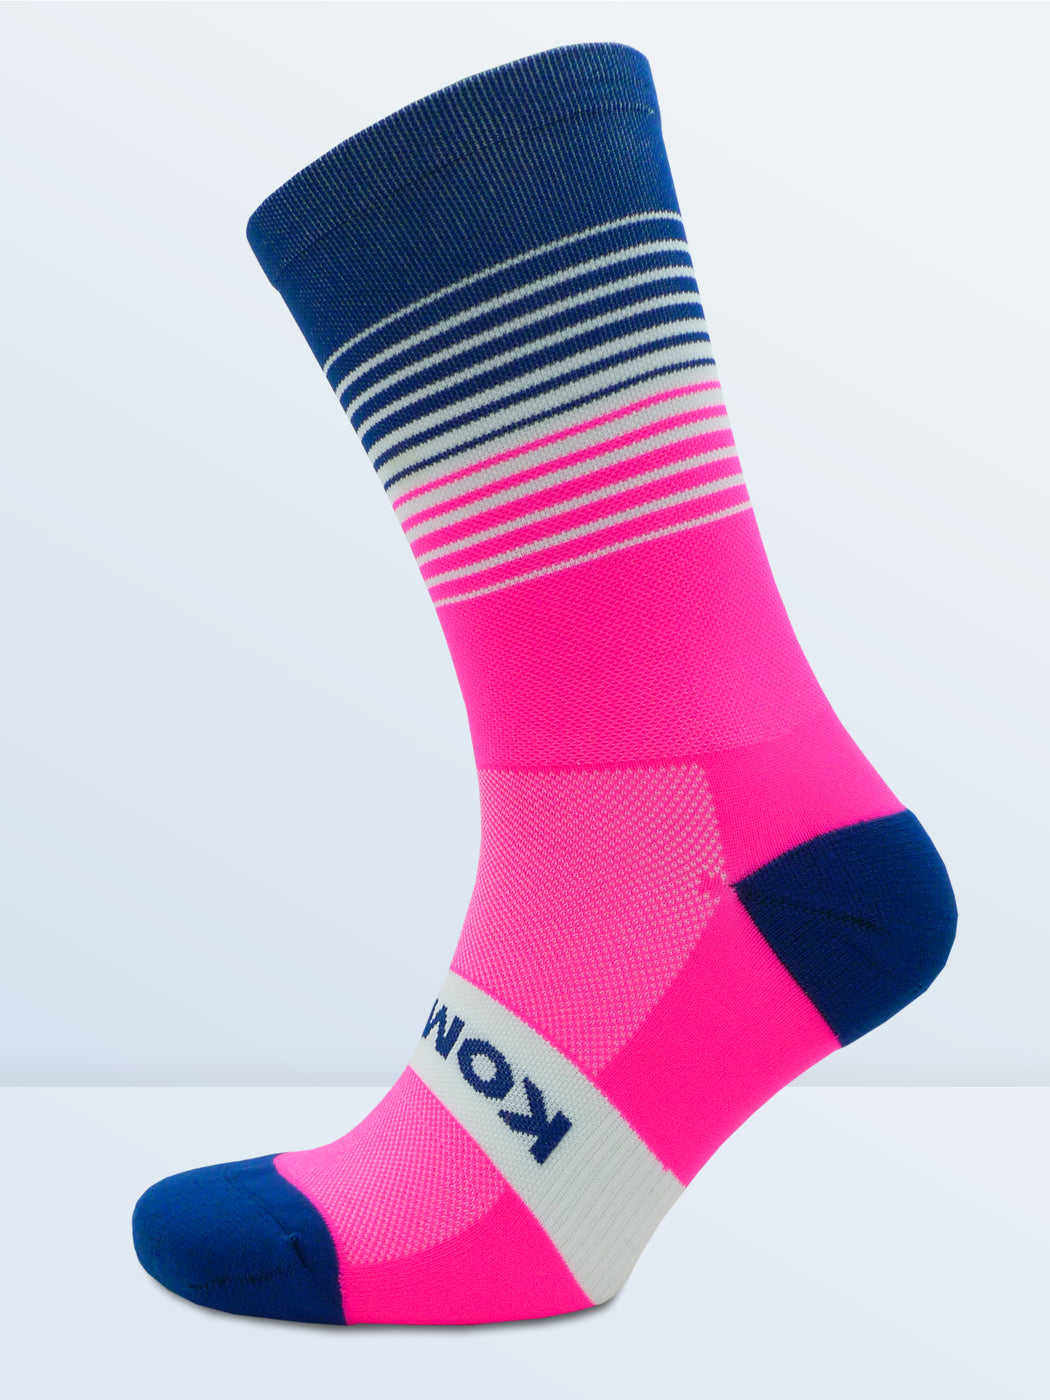 Swagger Socks - Fluro Pink & Blue